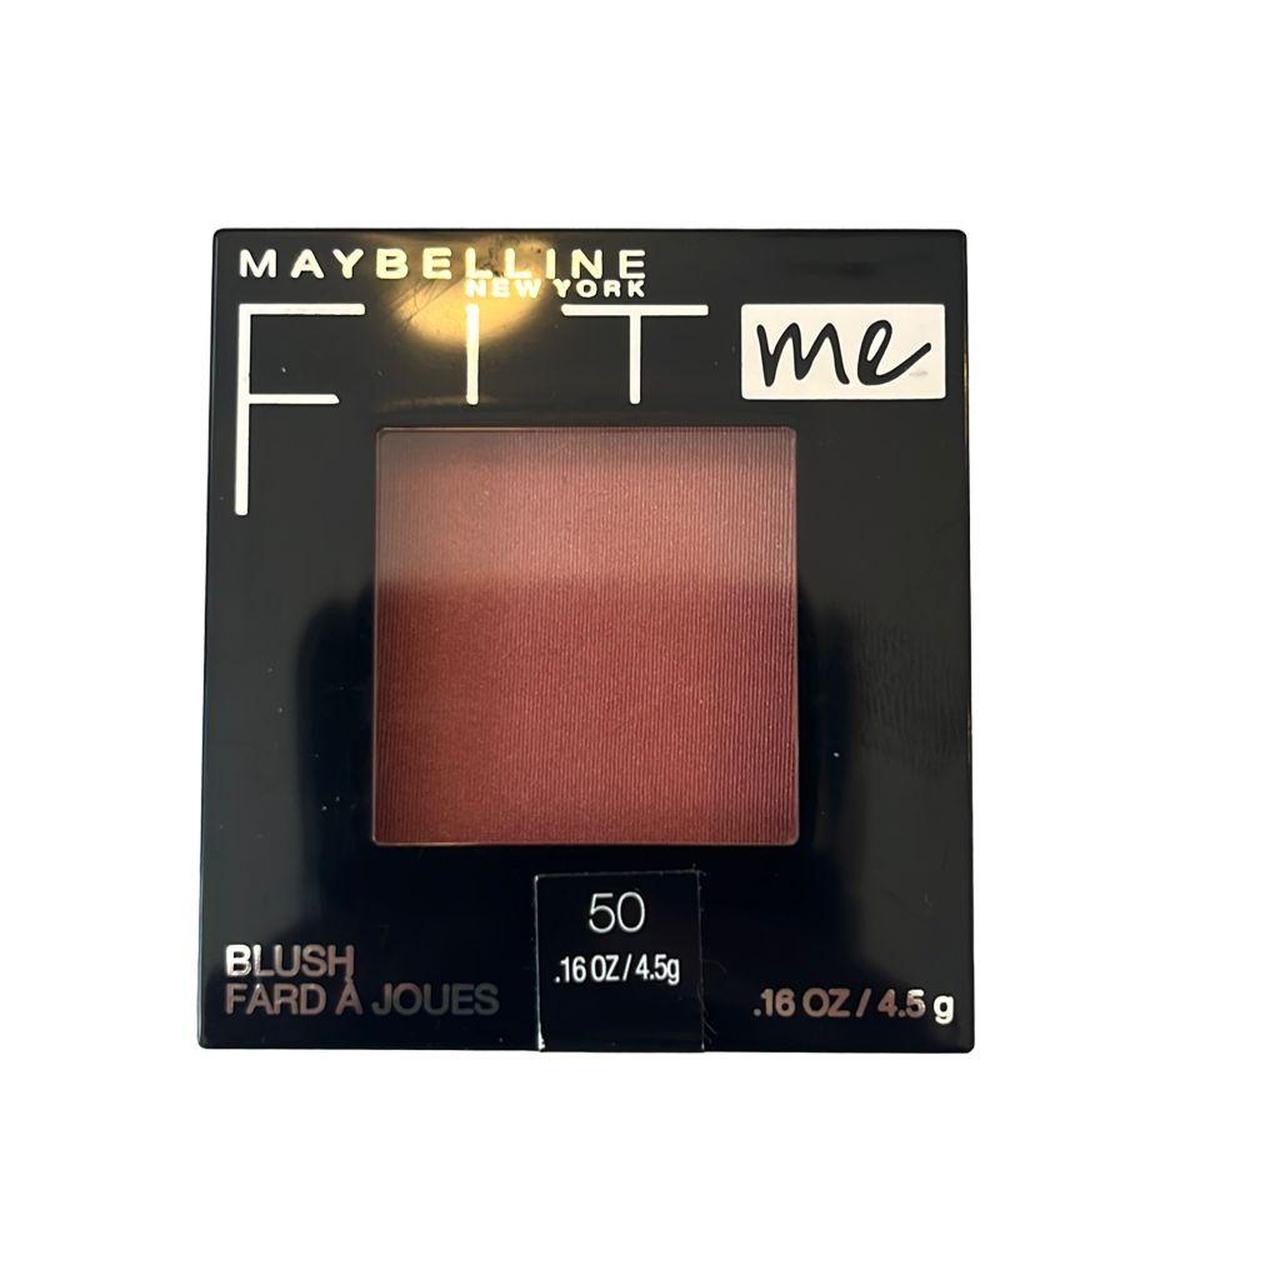 Maybelline Pink Makeup